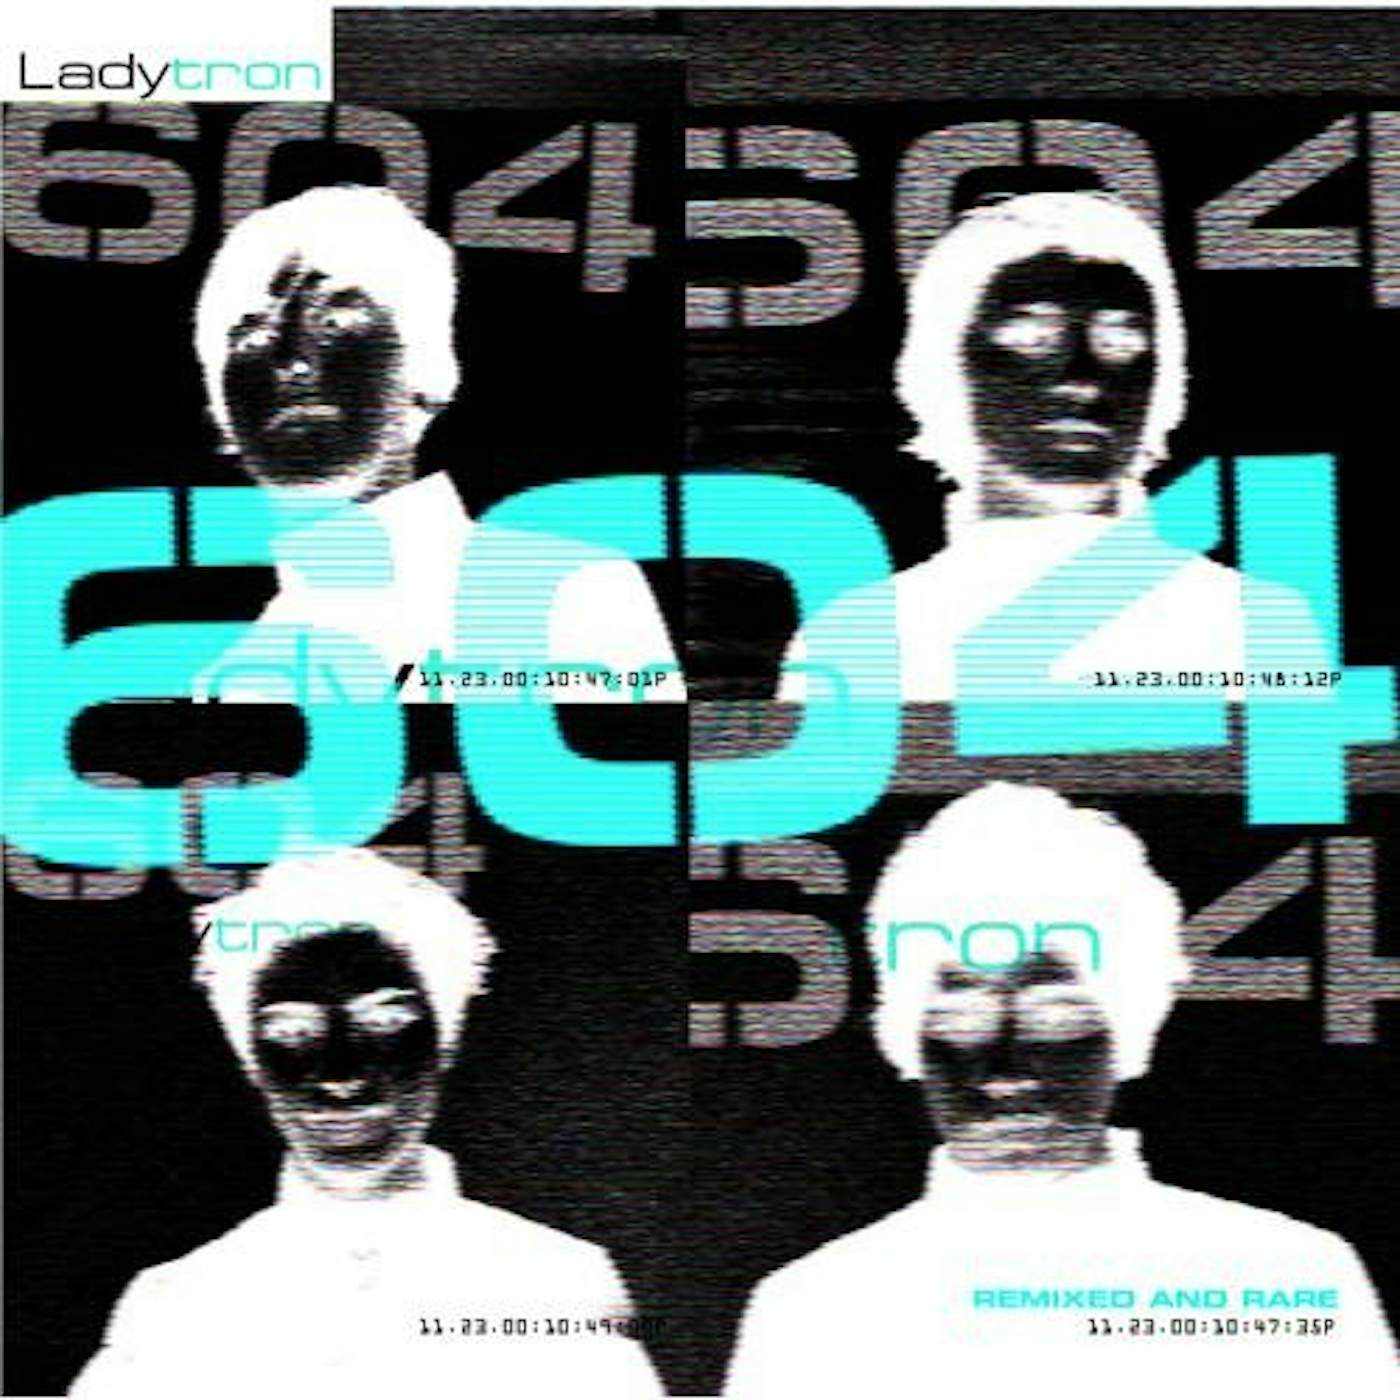 Ladytron 604: REMIXED & RARE CD